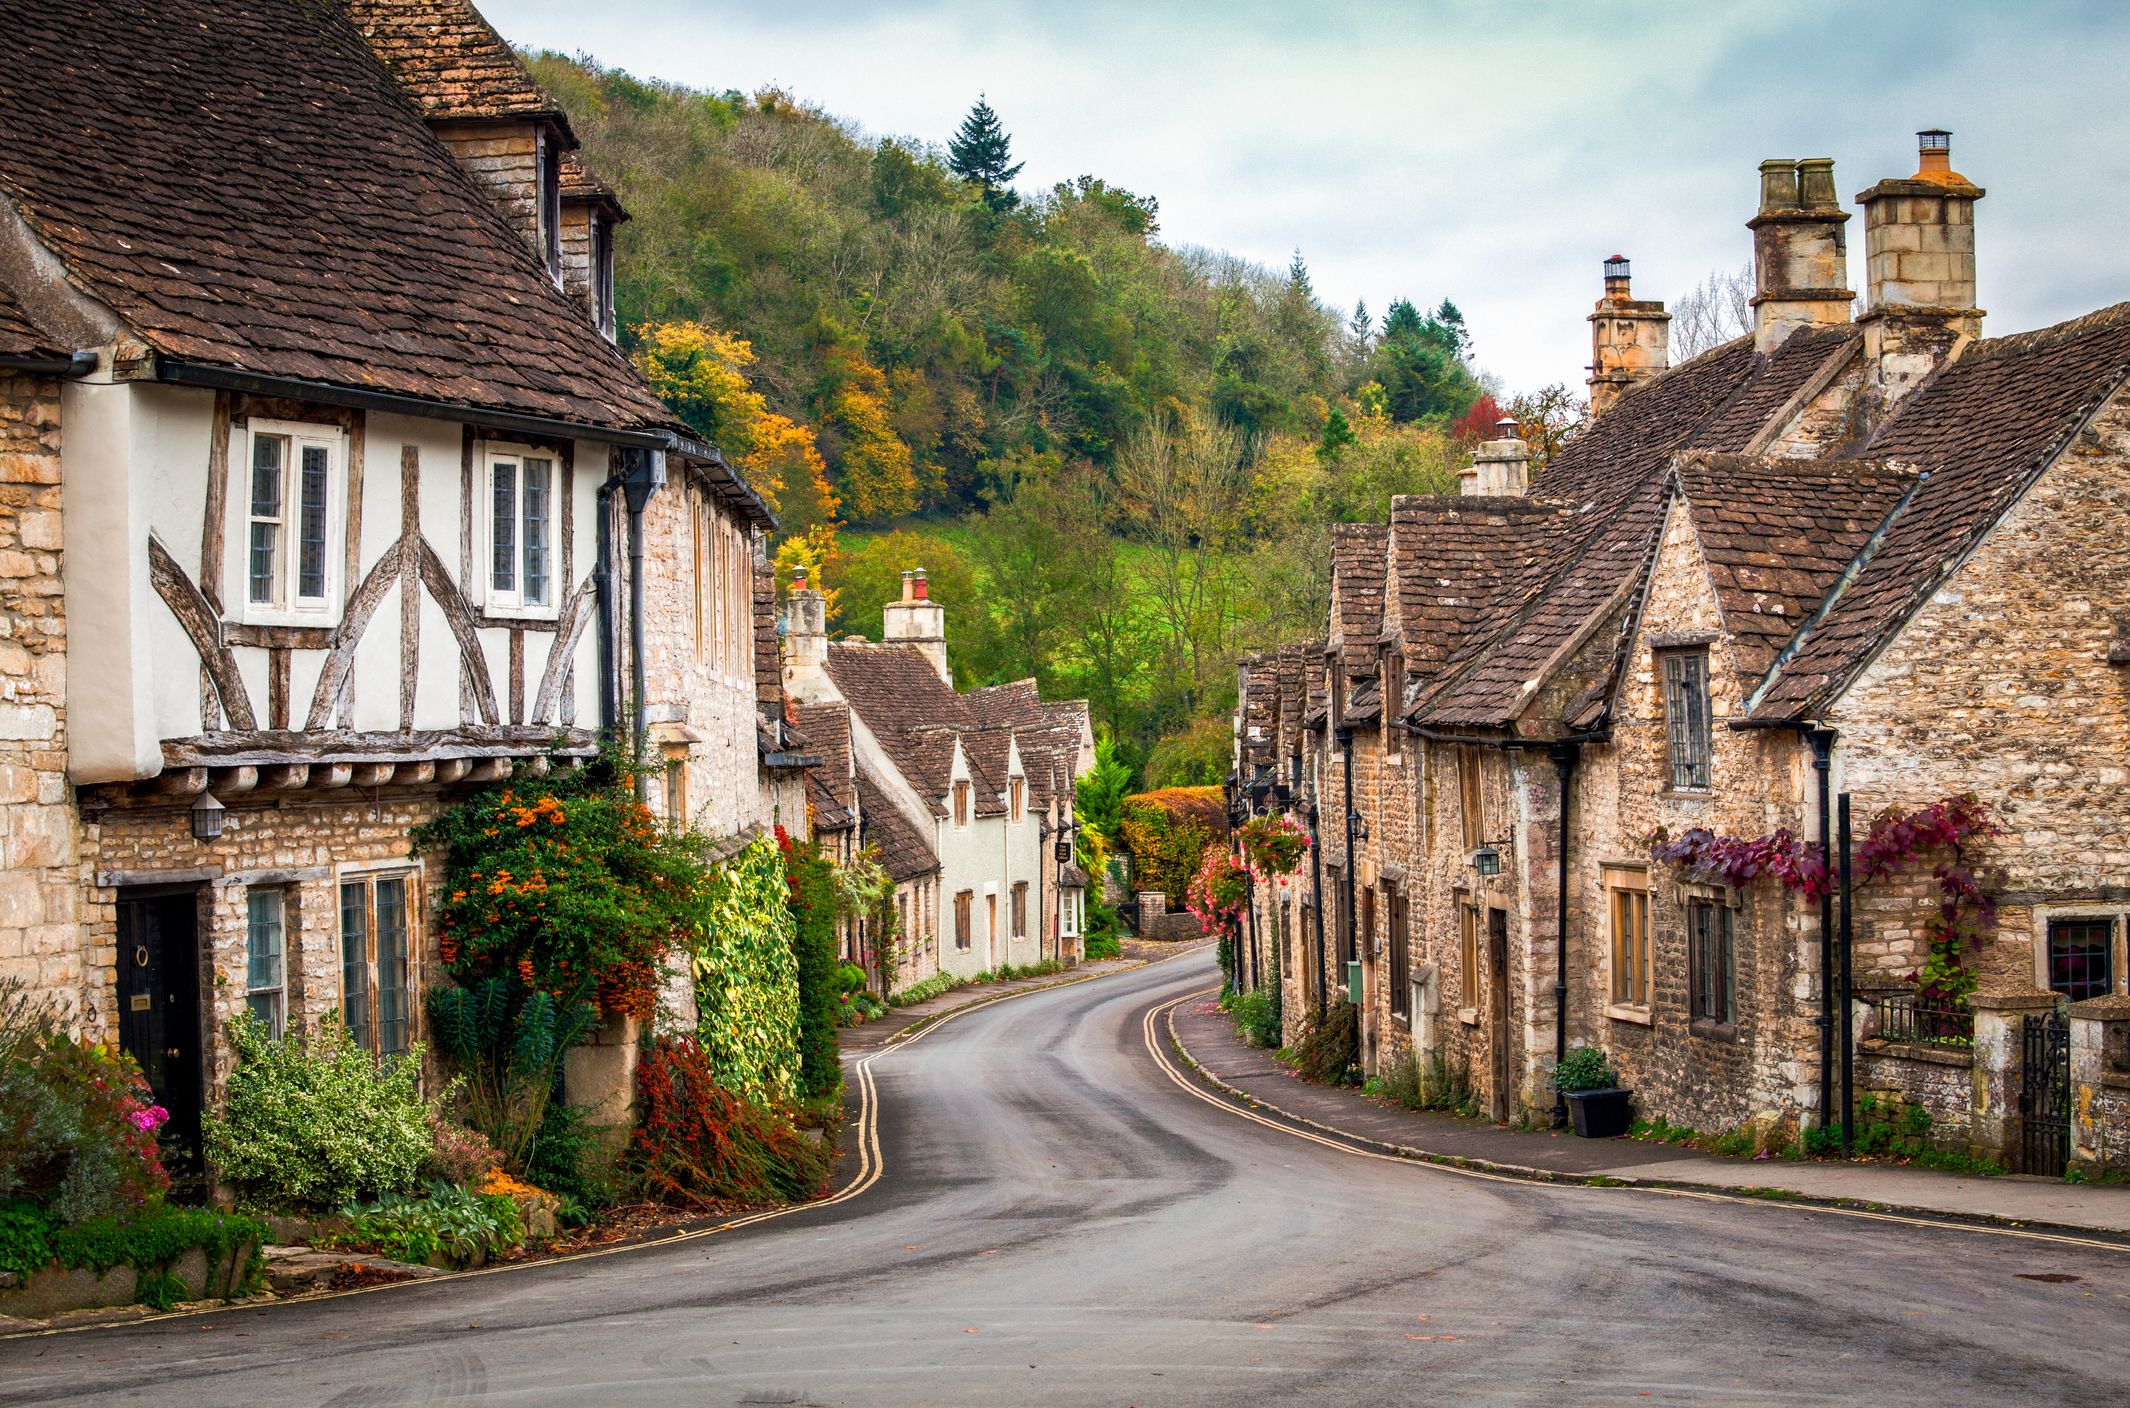 Pretty Villages in England - UK mini-break travel ideas